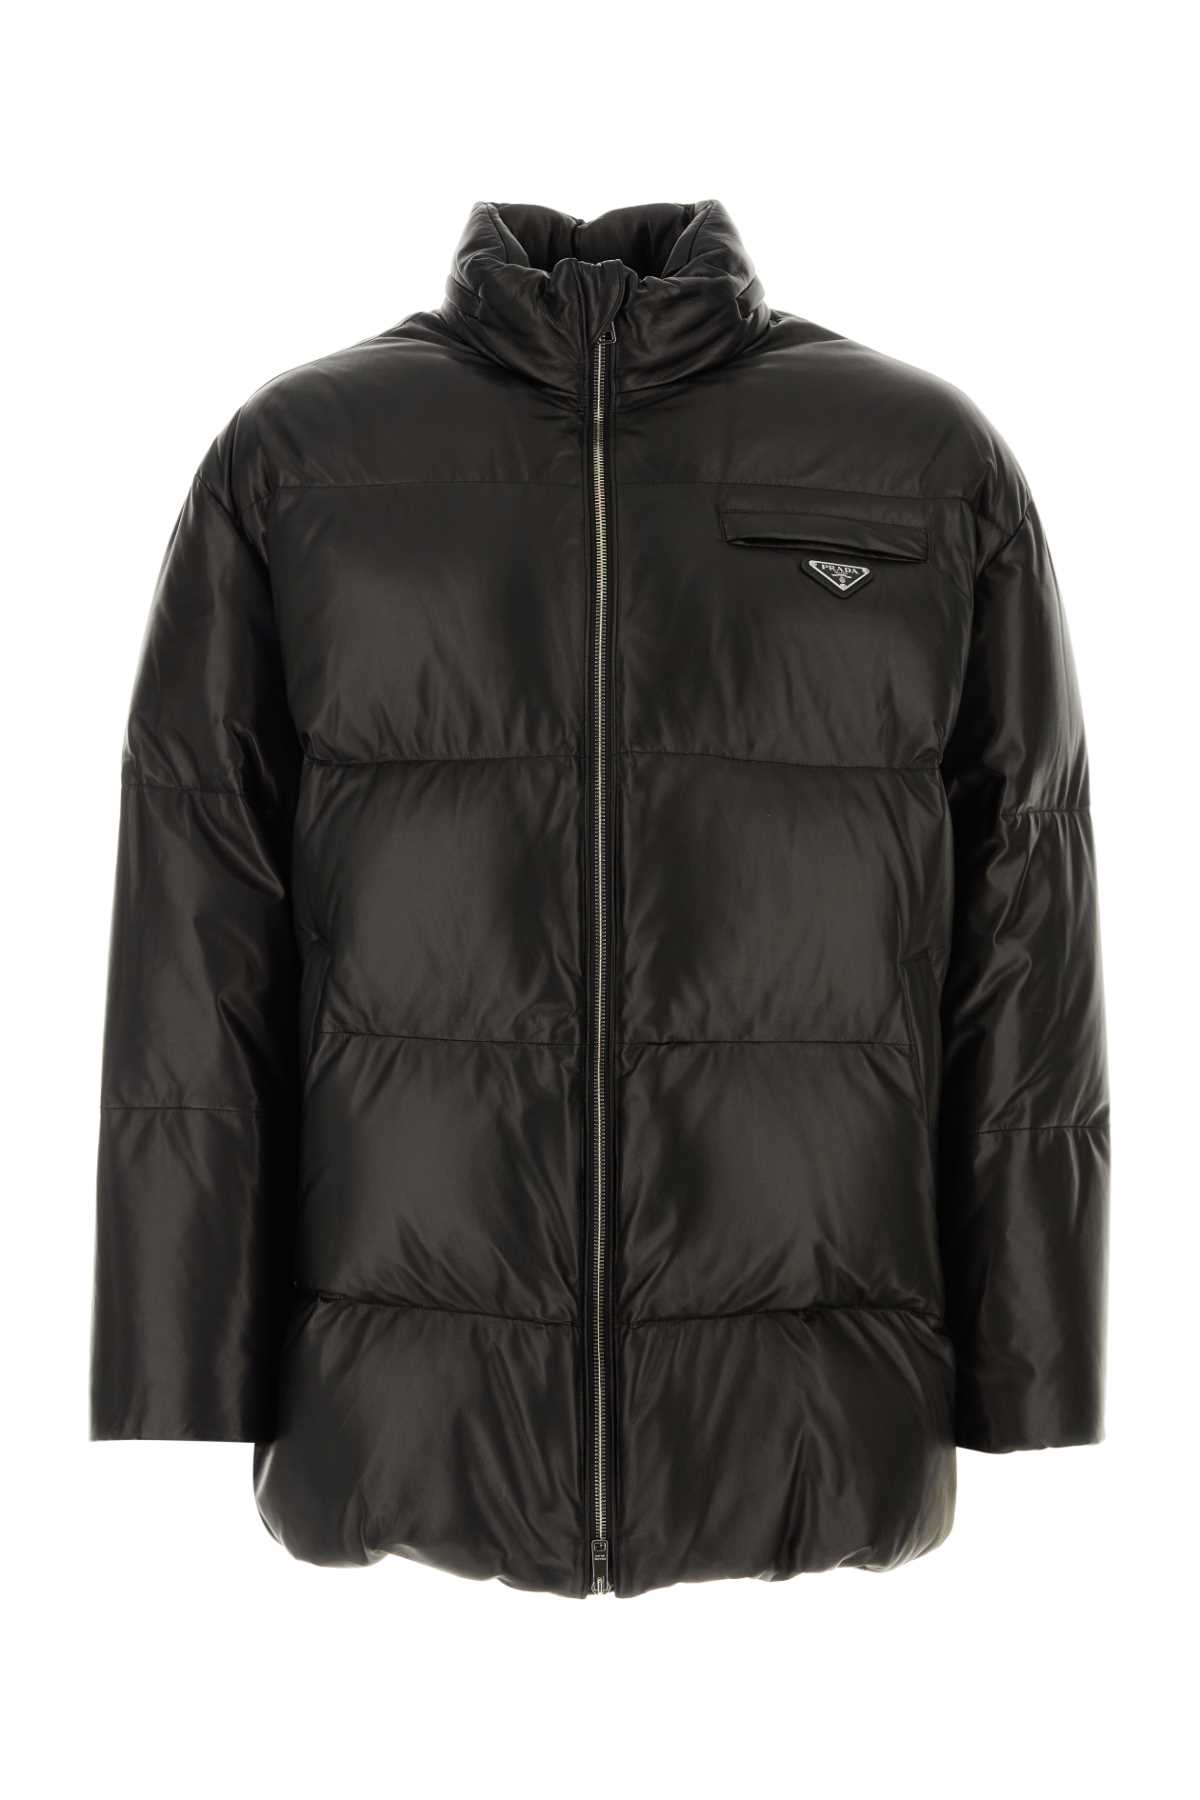 Prada Black Nappa Leather Down Jacket